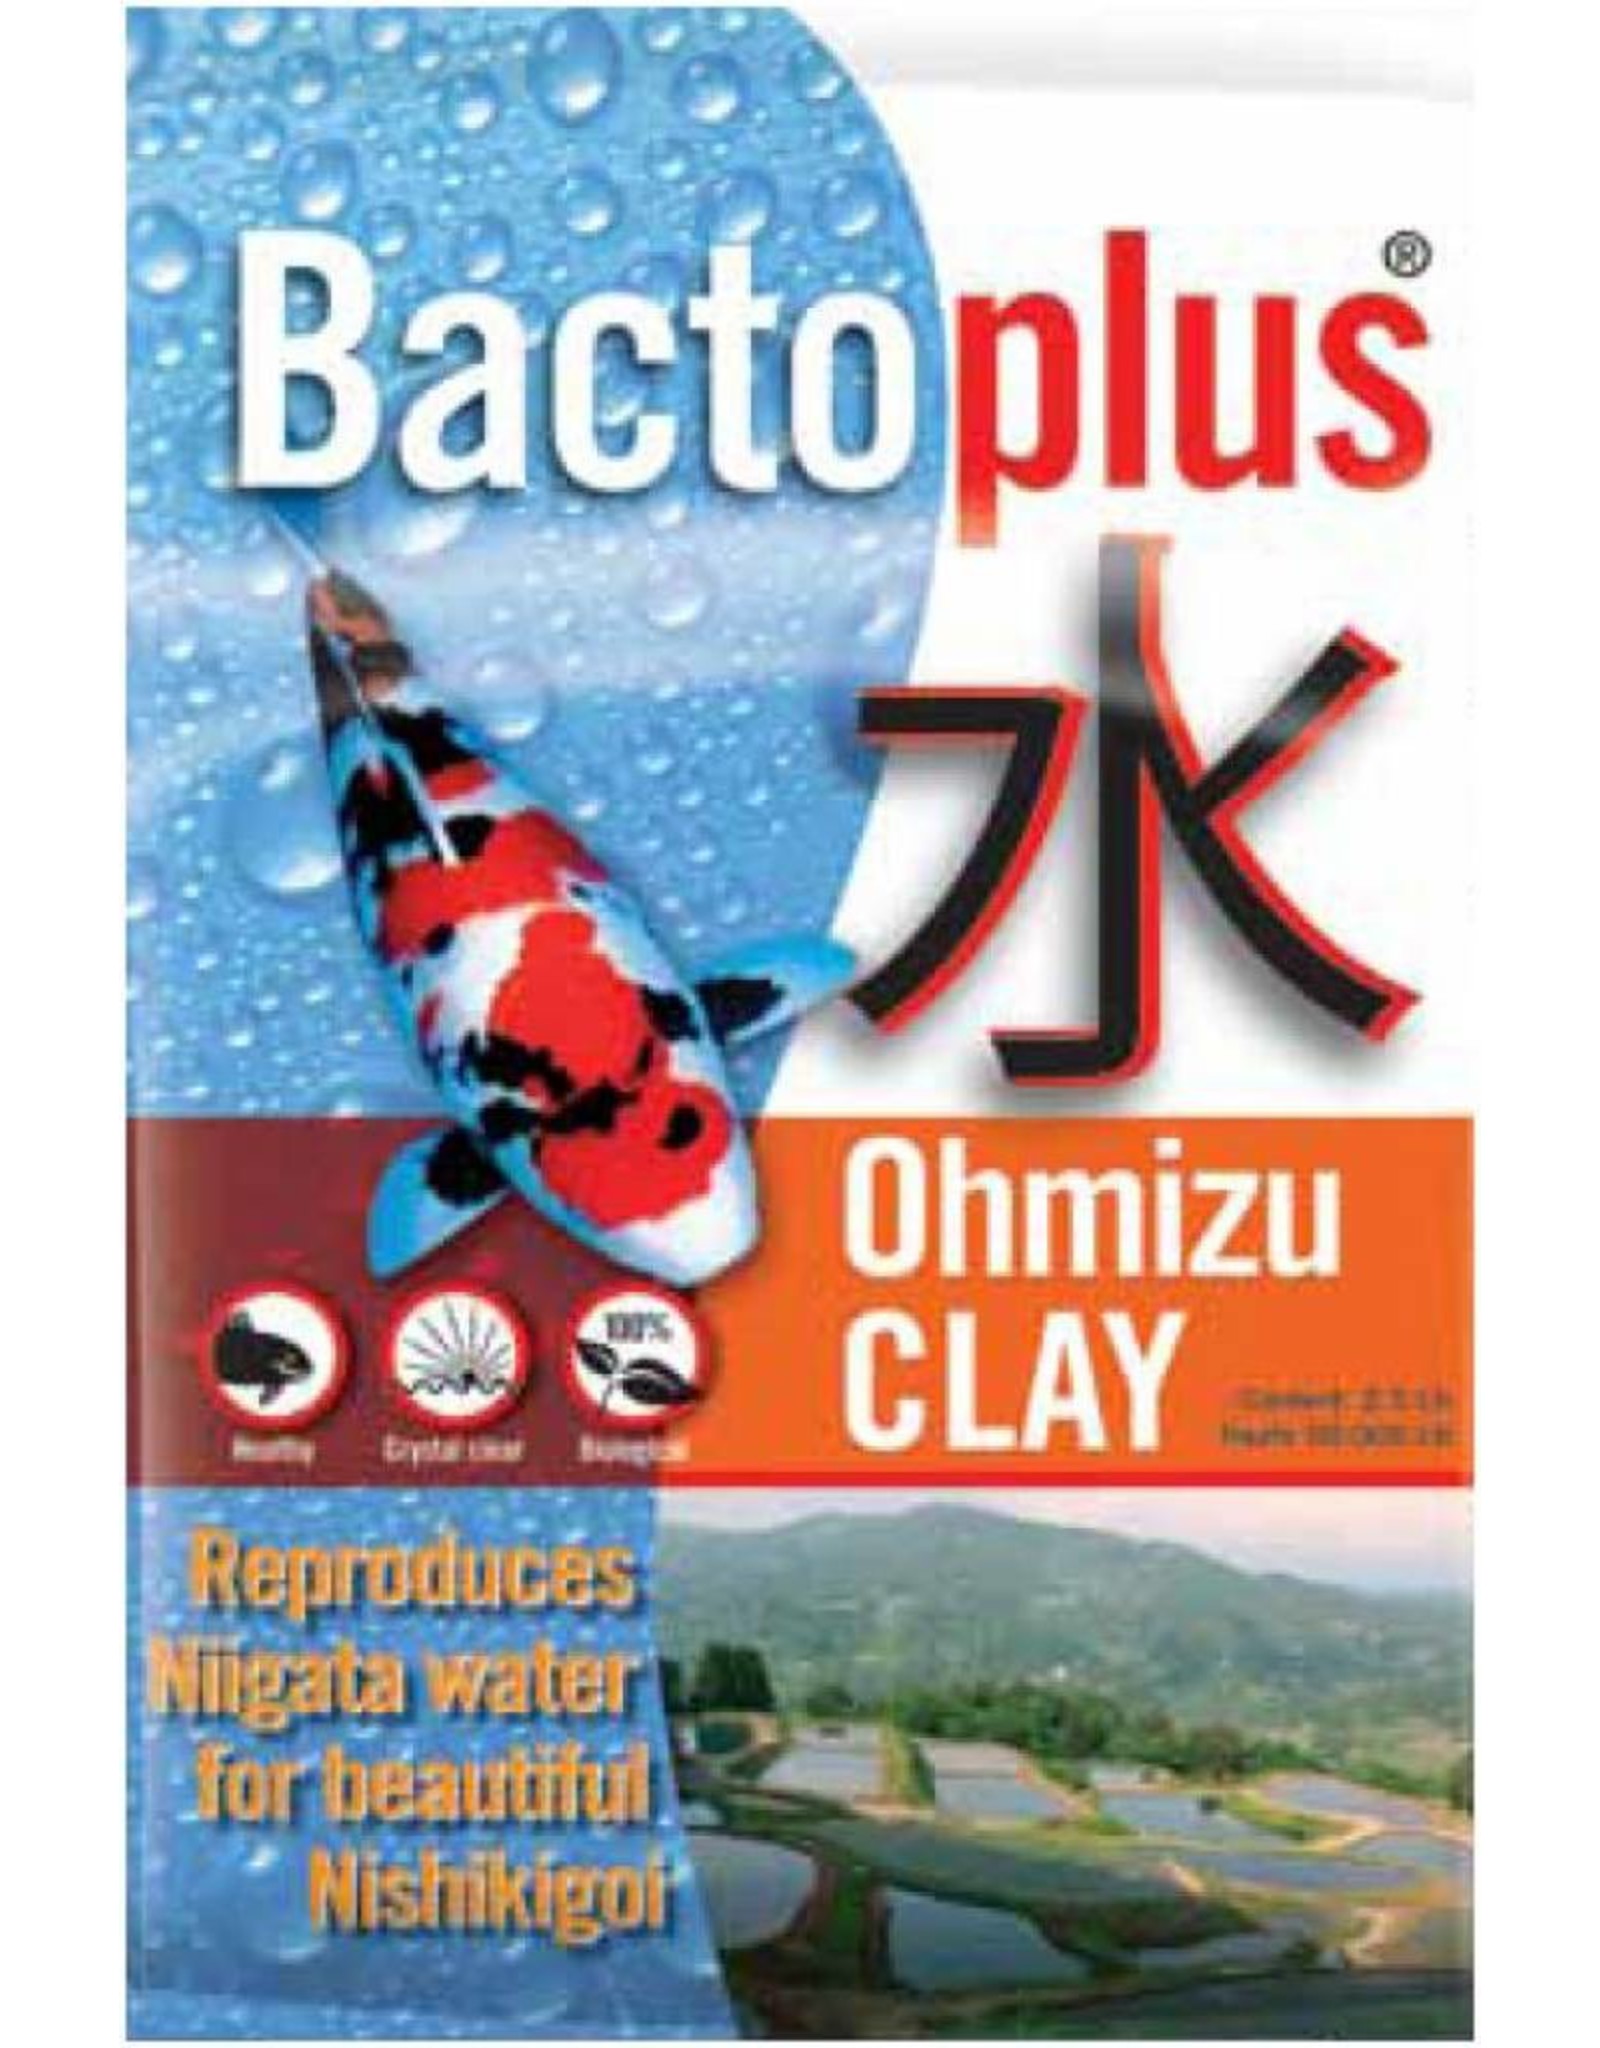 Bactoplus Bactoplus Ohmizu Clay. The secret to fantastic water from Japan.